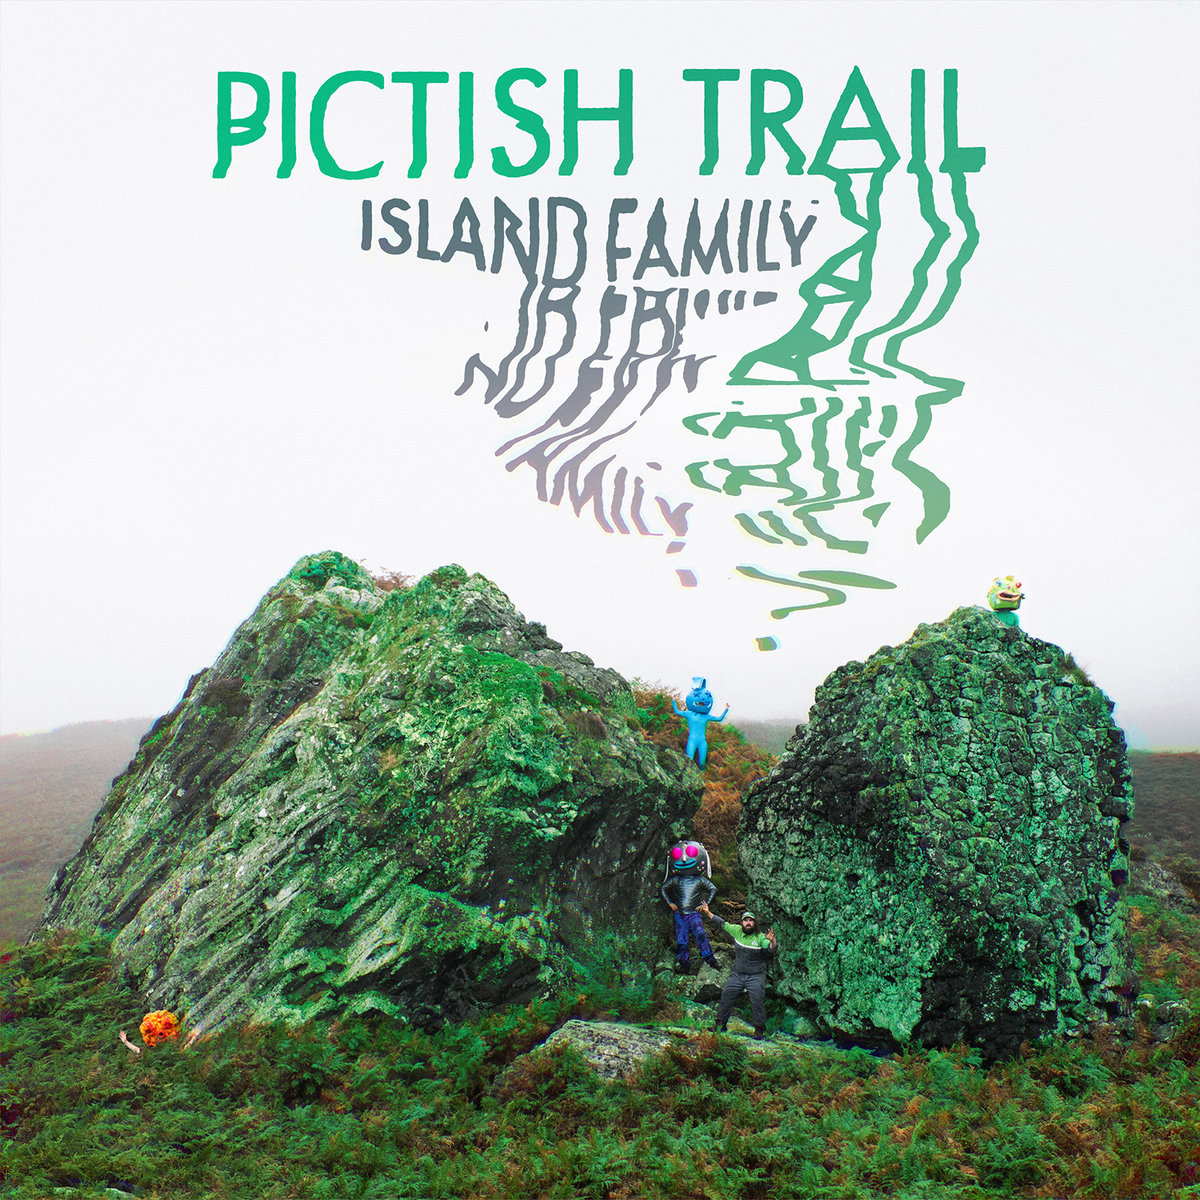 Pictish Trail "Island Family" LP